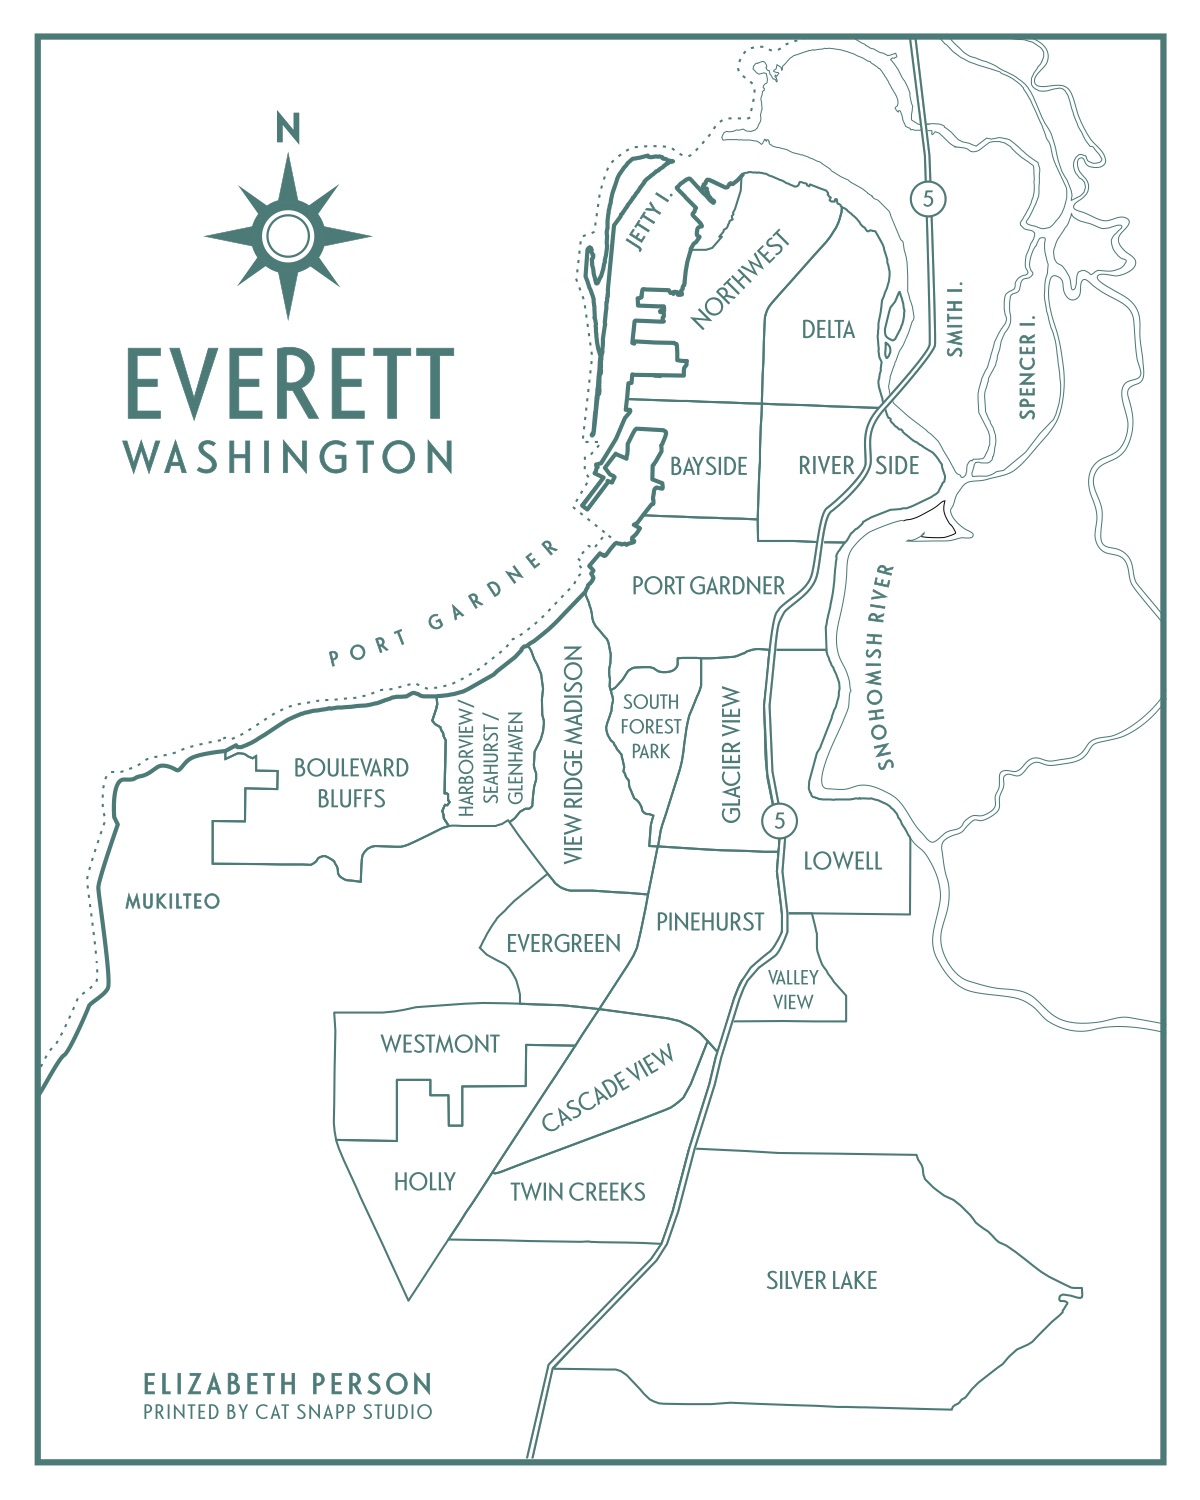 ‘80s Everett A Brief History Of Everett Neighborhoods — Lamoureux Real